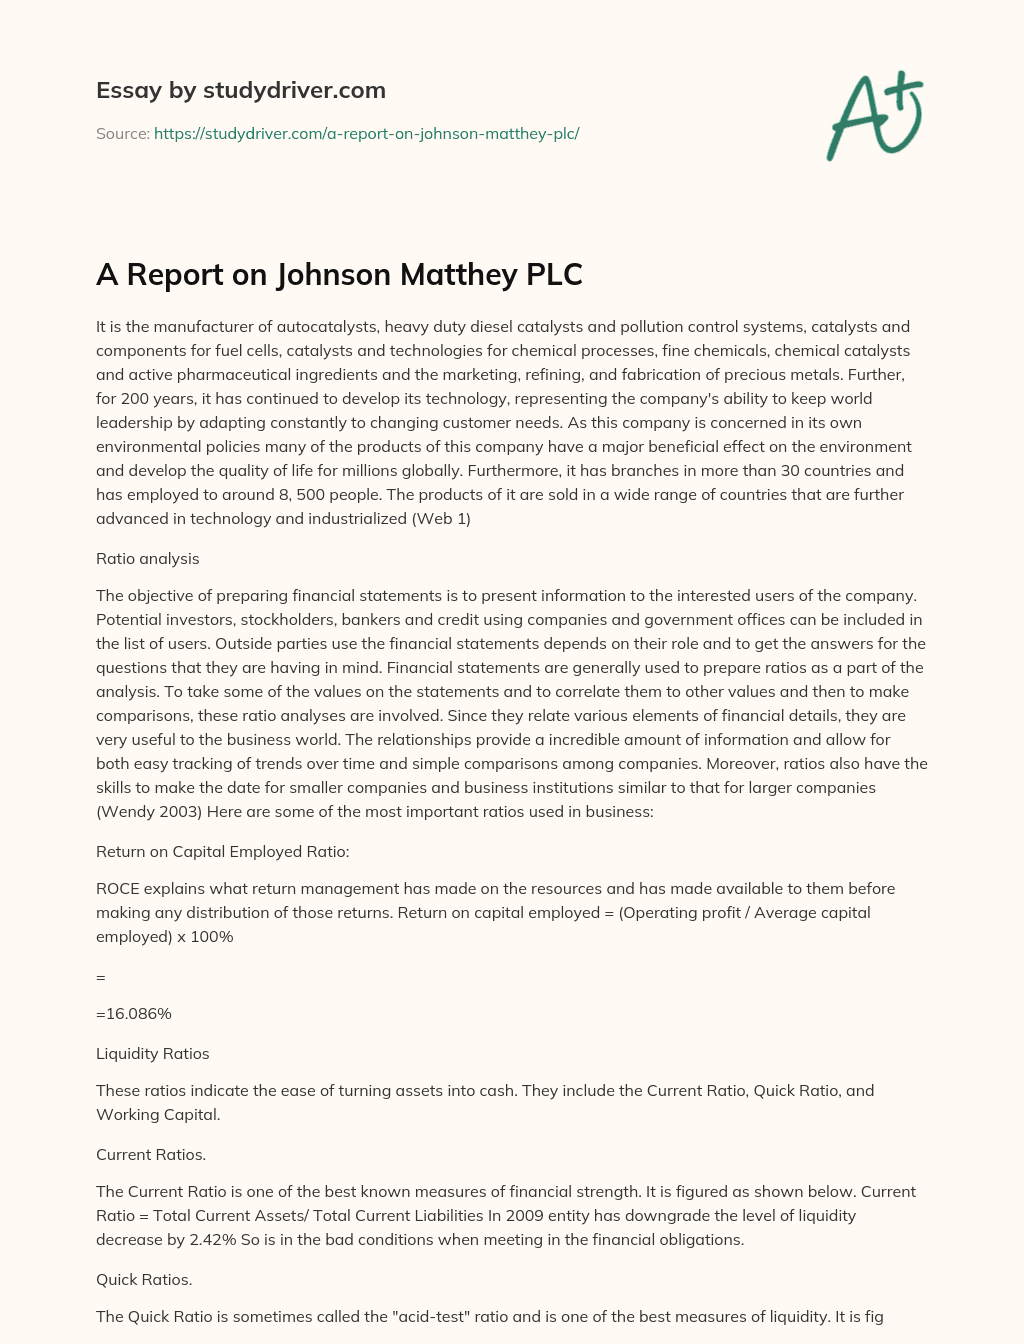 A Report on Johnson Matthey PLC‎ essay